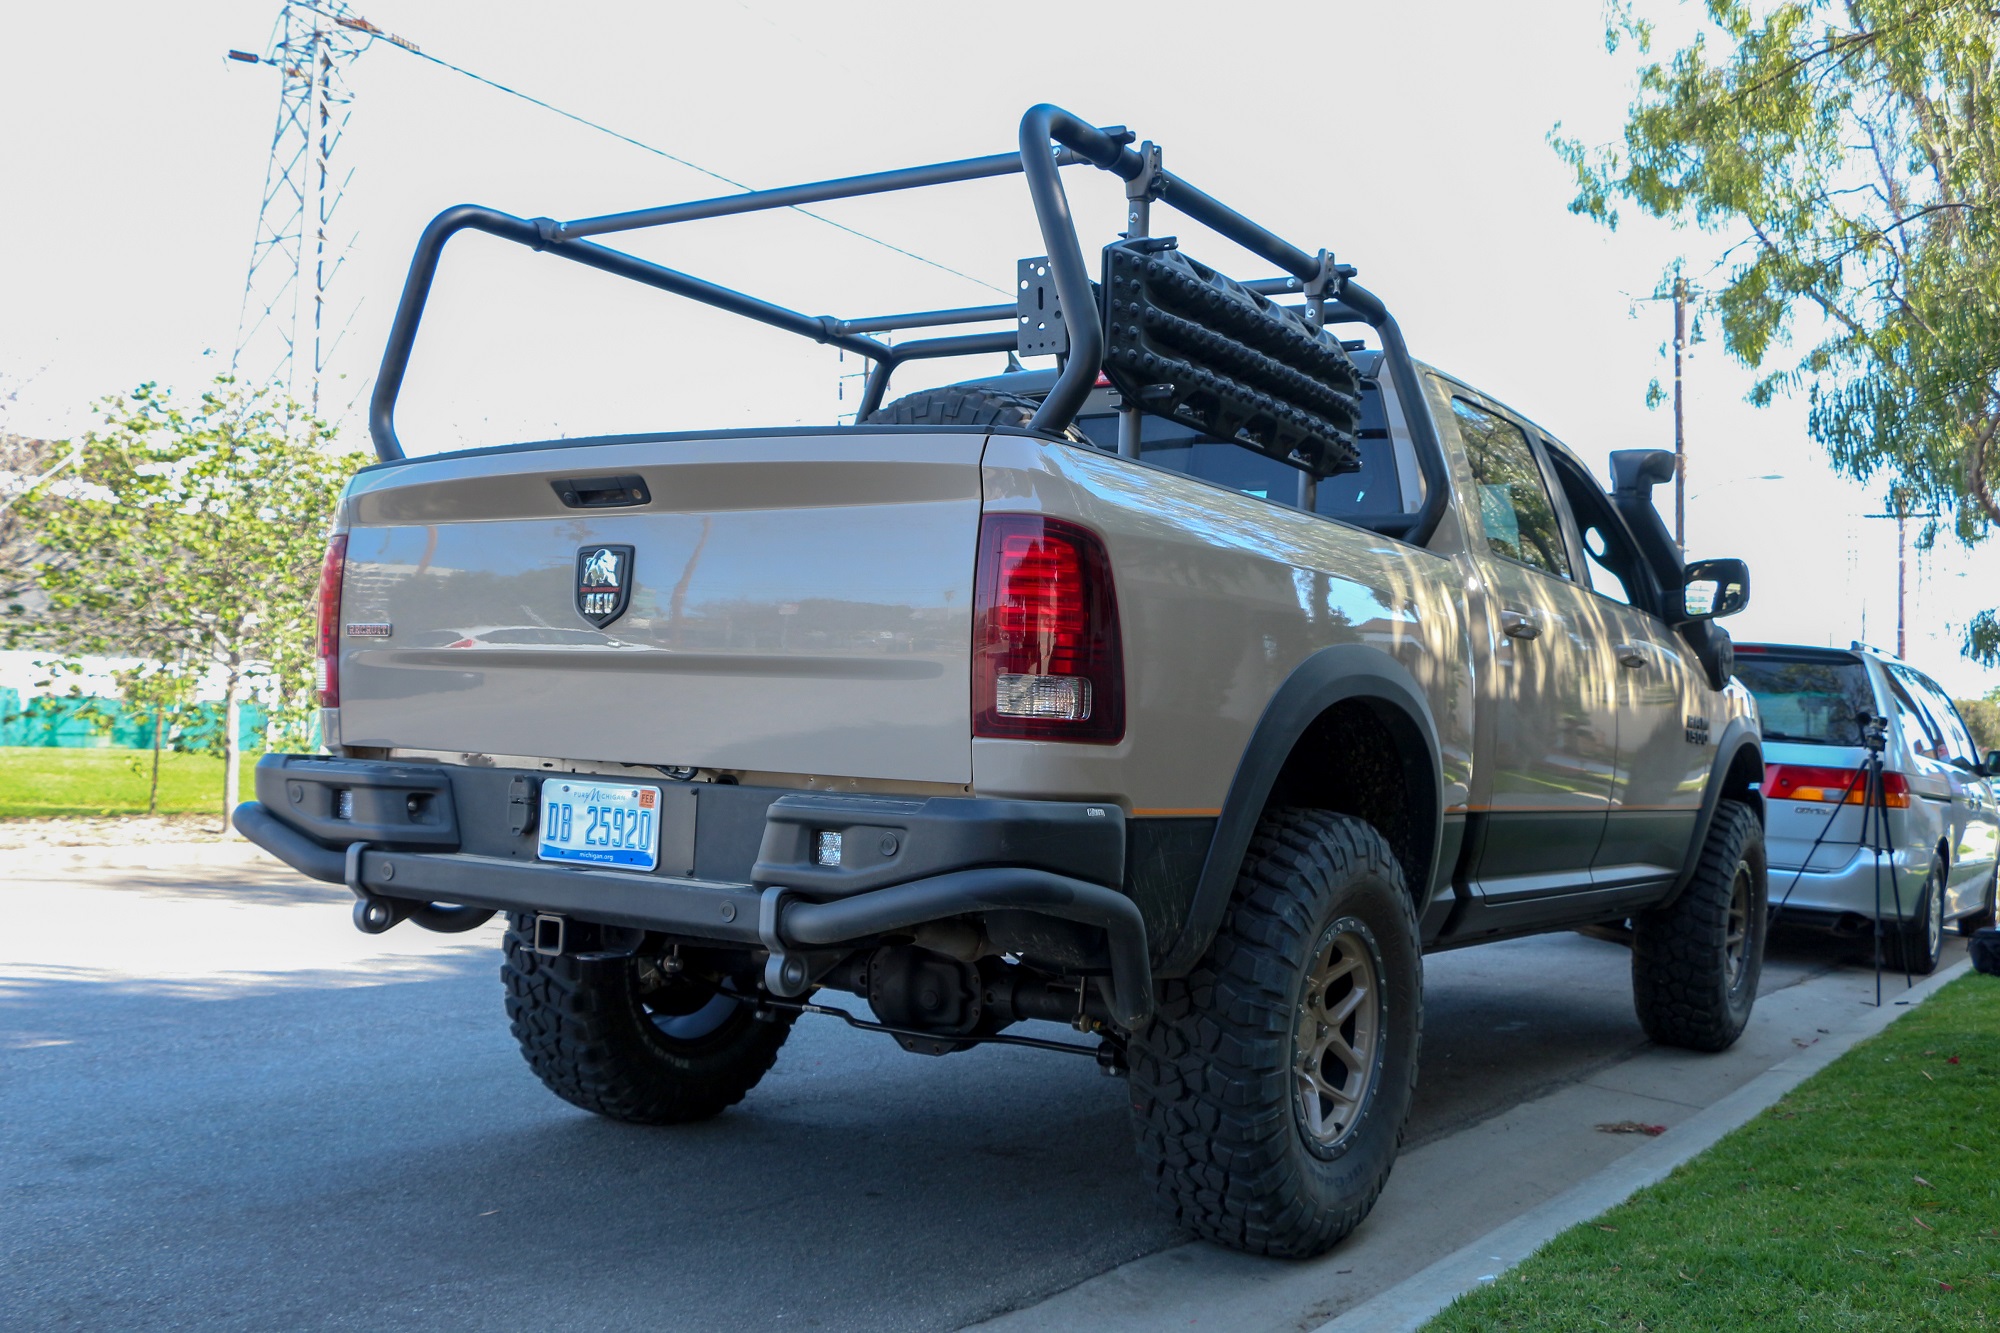 Dodgeforum.com American Expedition Vehicles AEV Recruit RAM 1500 Rebel Dodge Truck